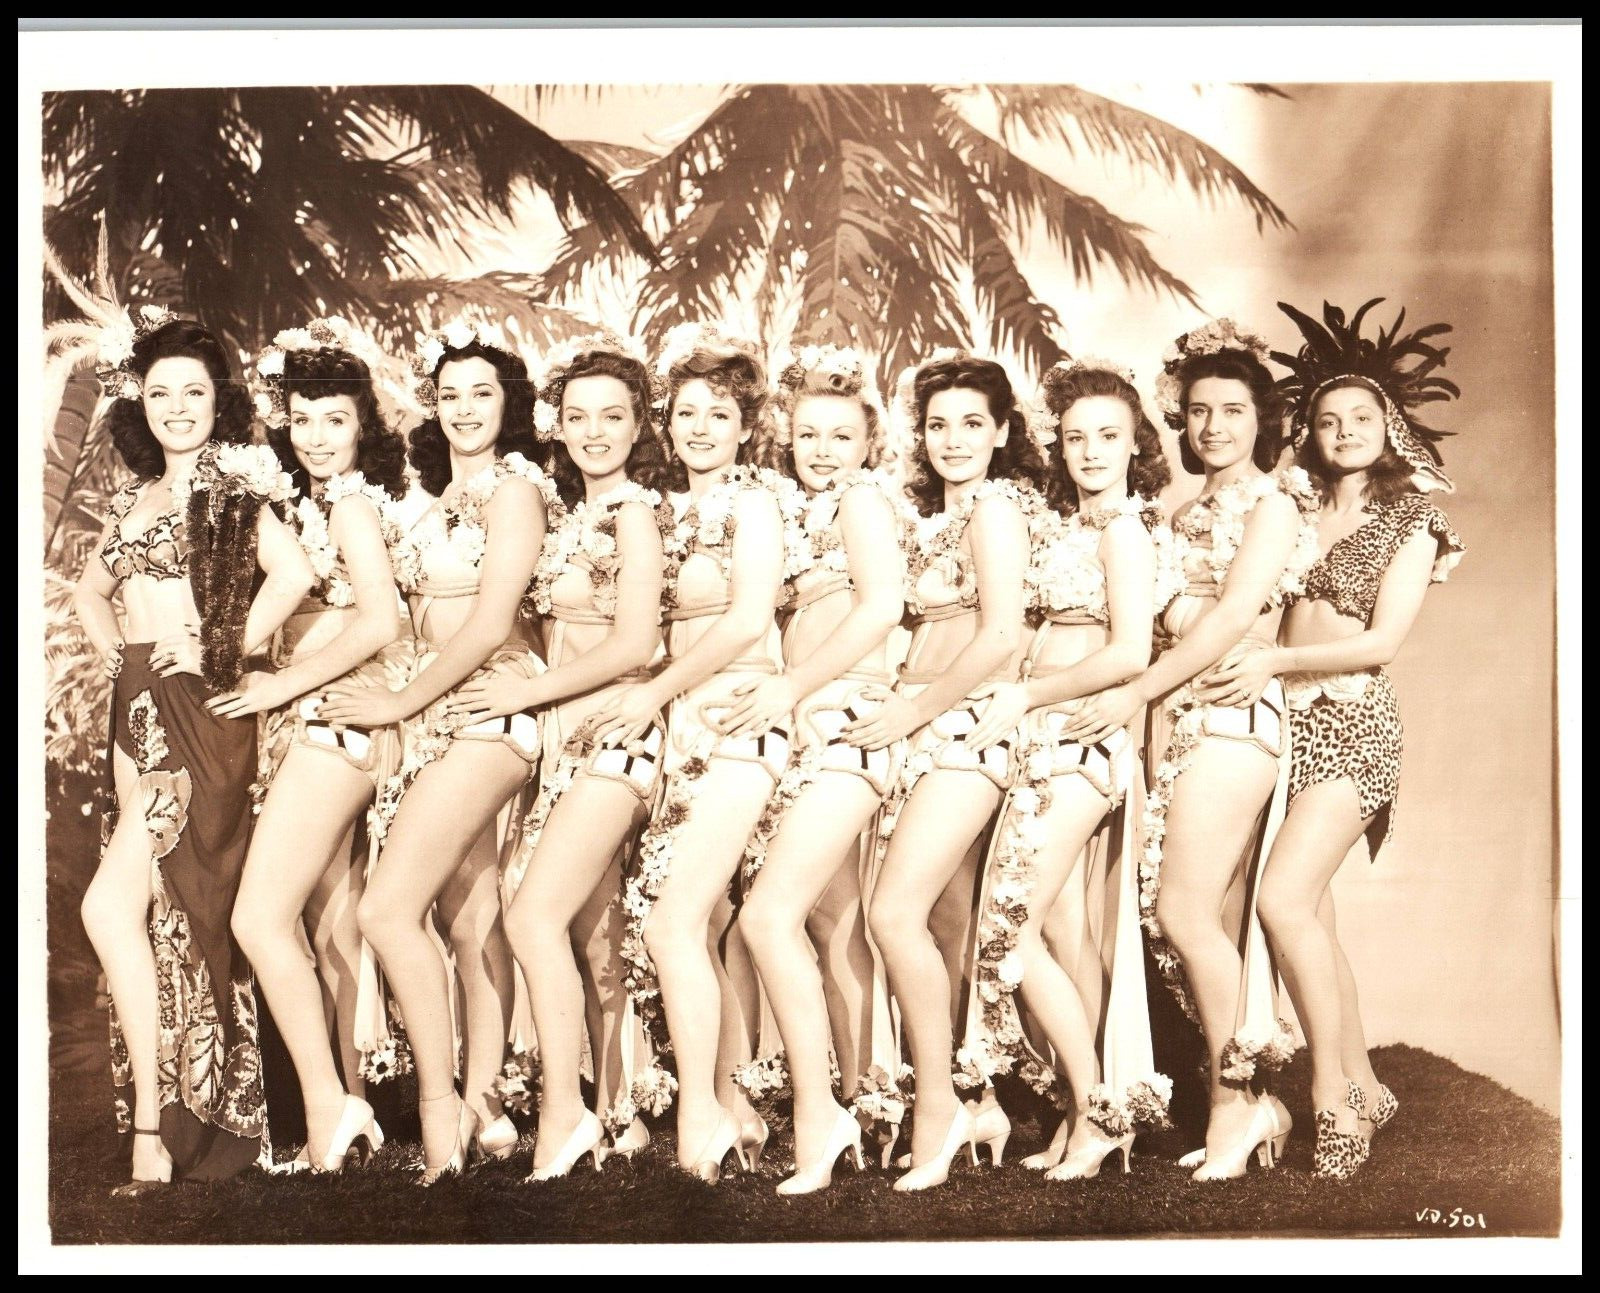 Hollywood ZIEGFELD GIRL Sylvia Opert CHEESECAKE 1940s ALLURING POSE  Photo 756